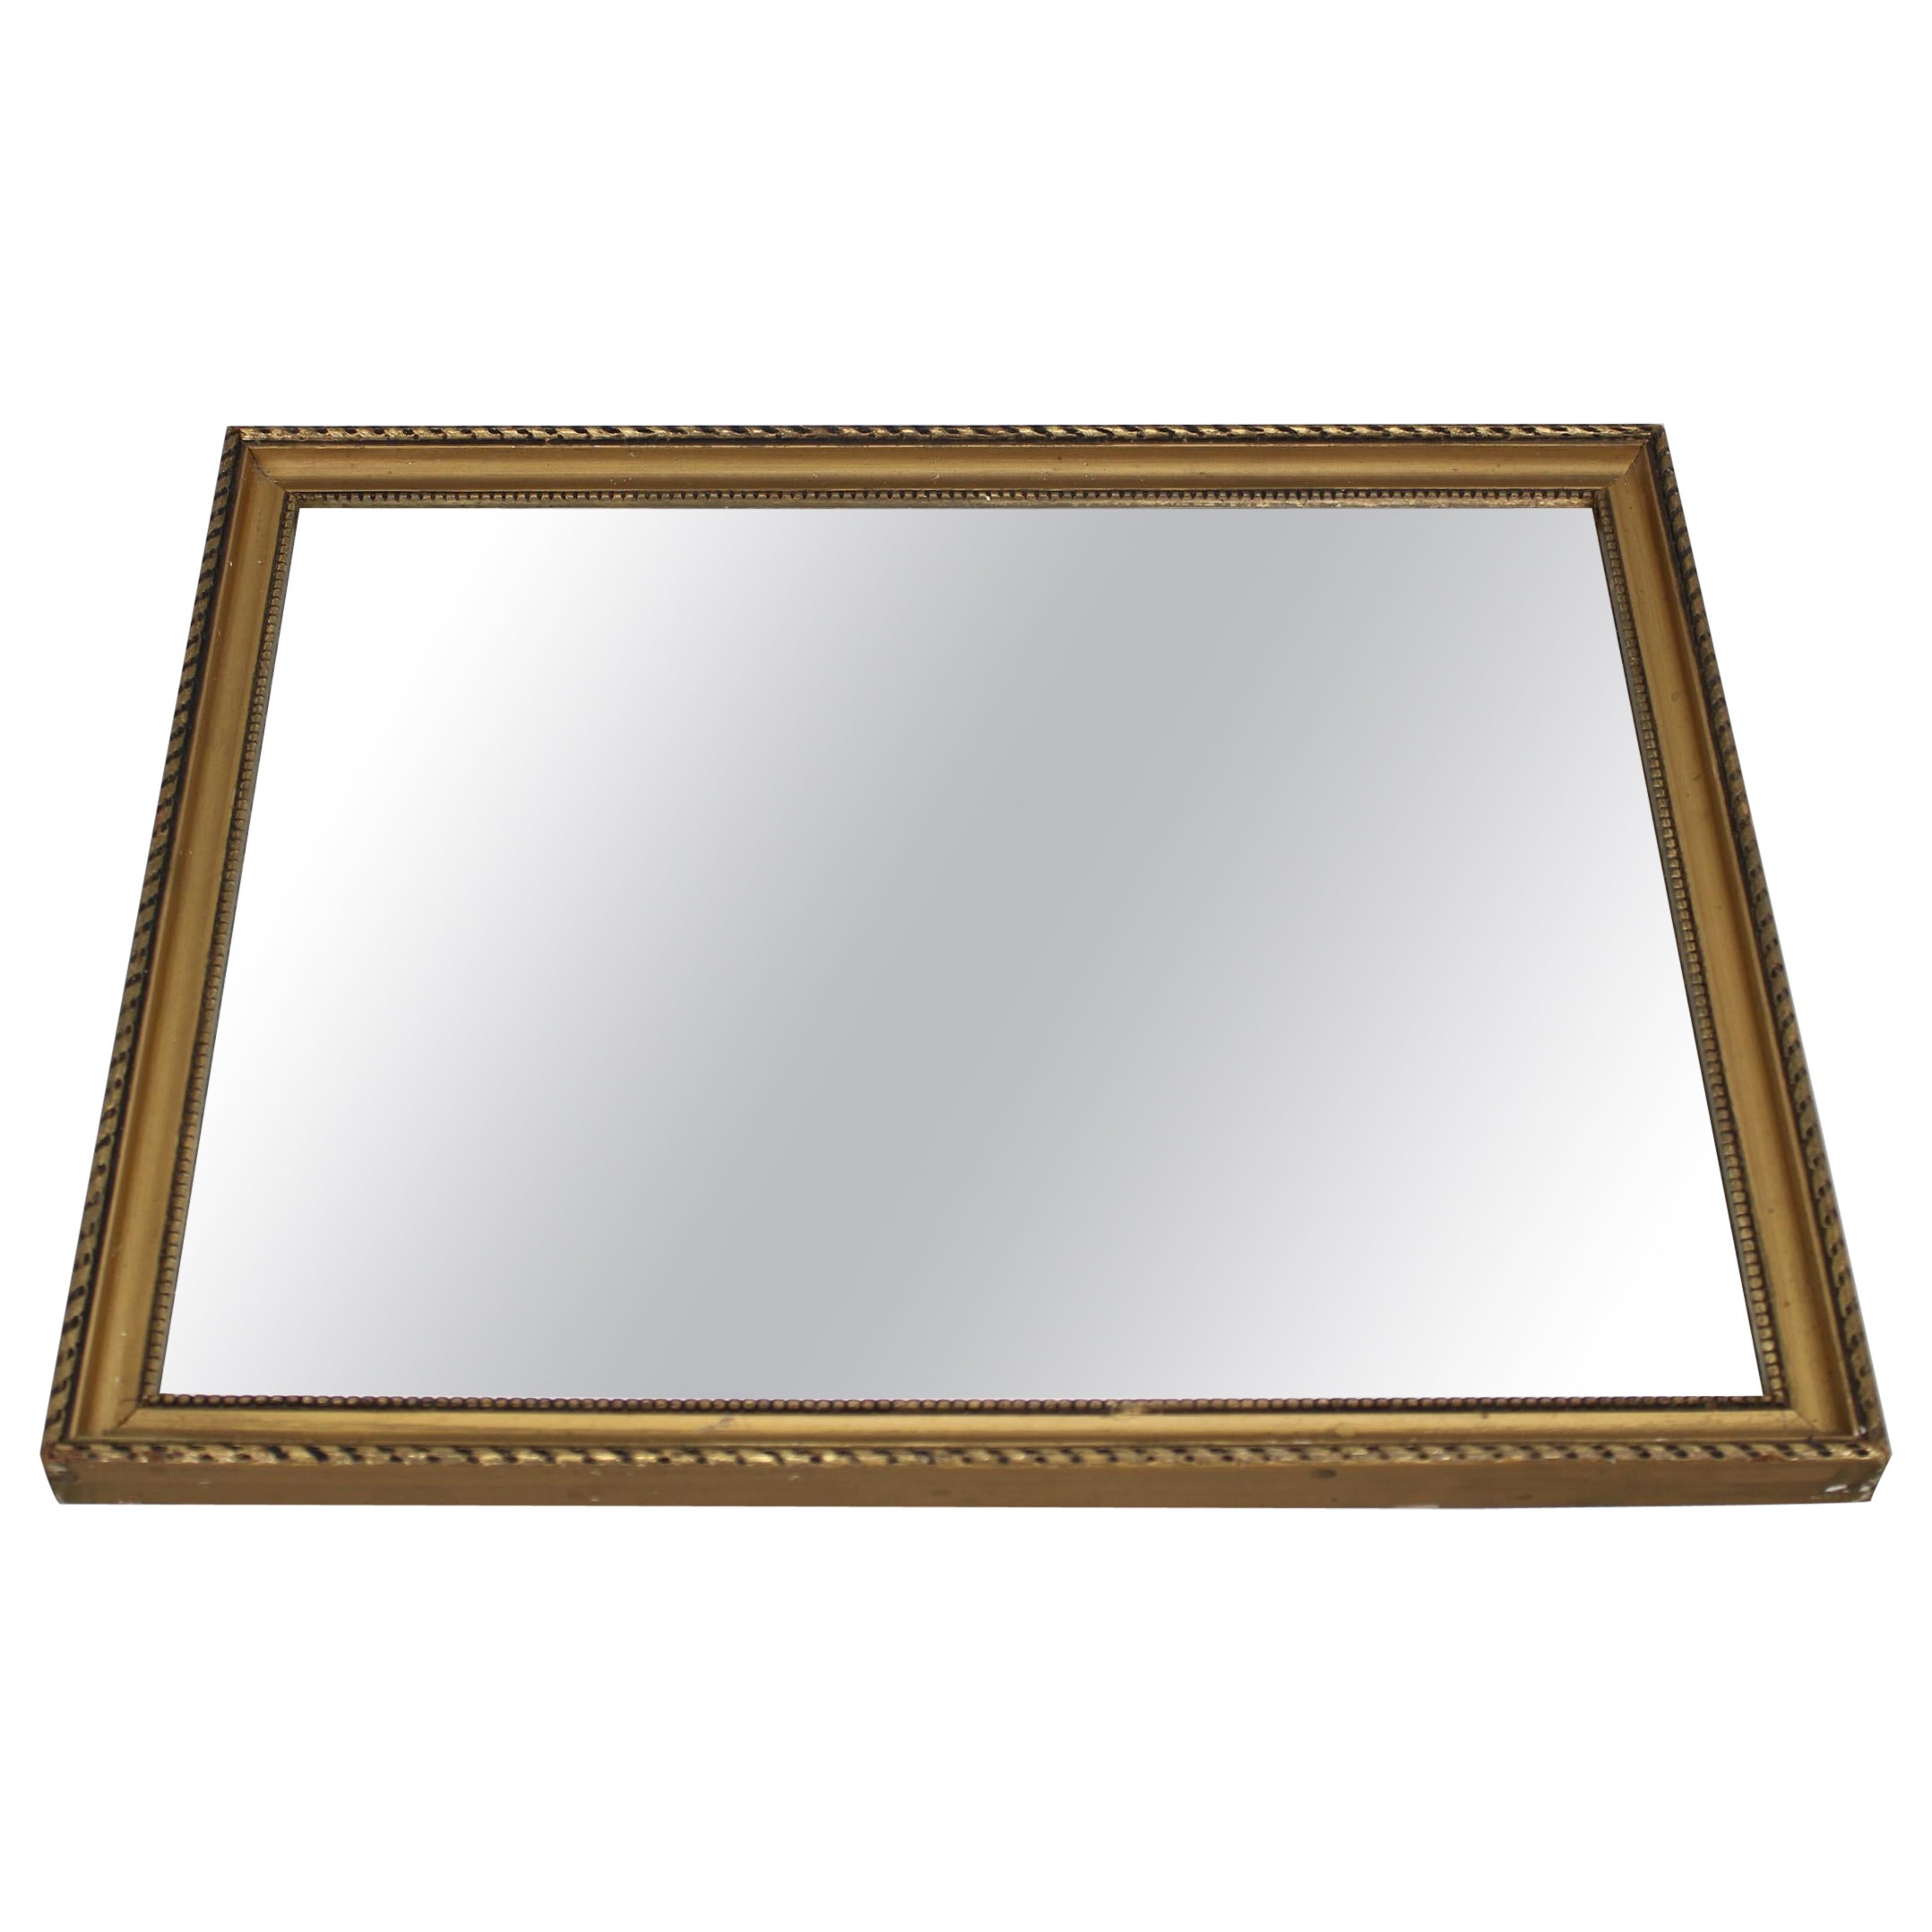 1950s Mirror in Golden Wood Frame